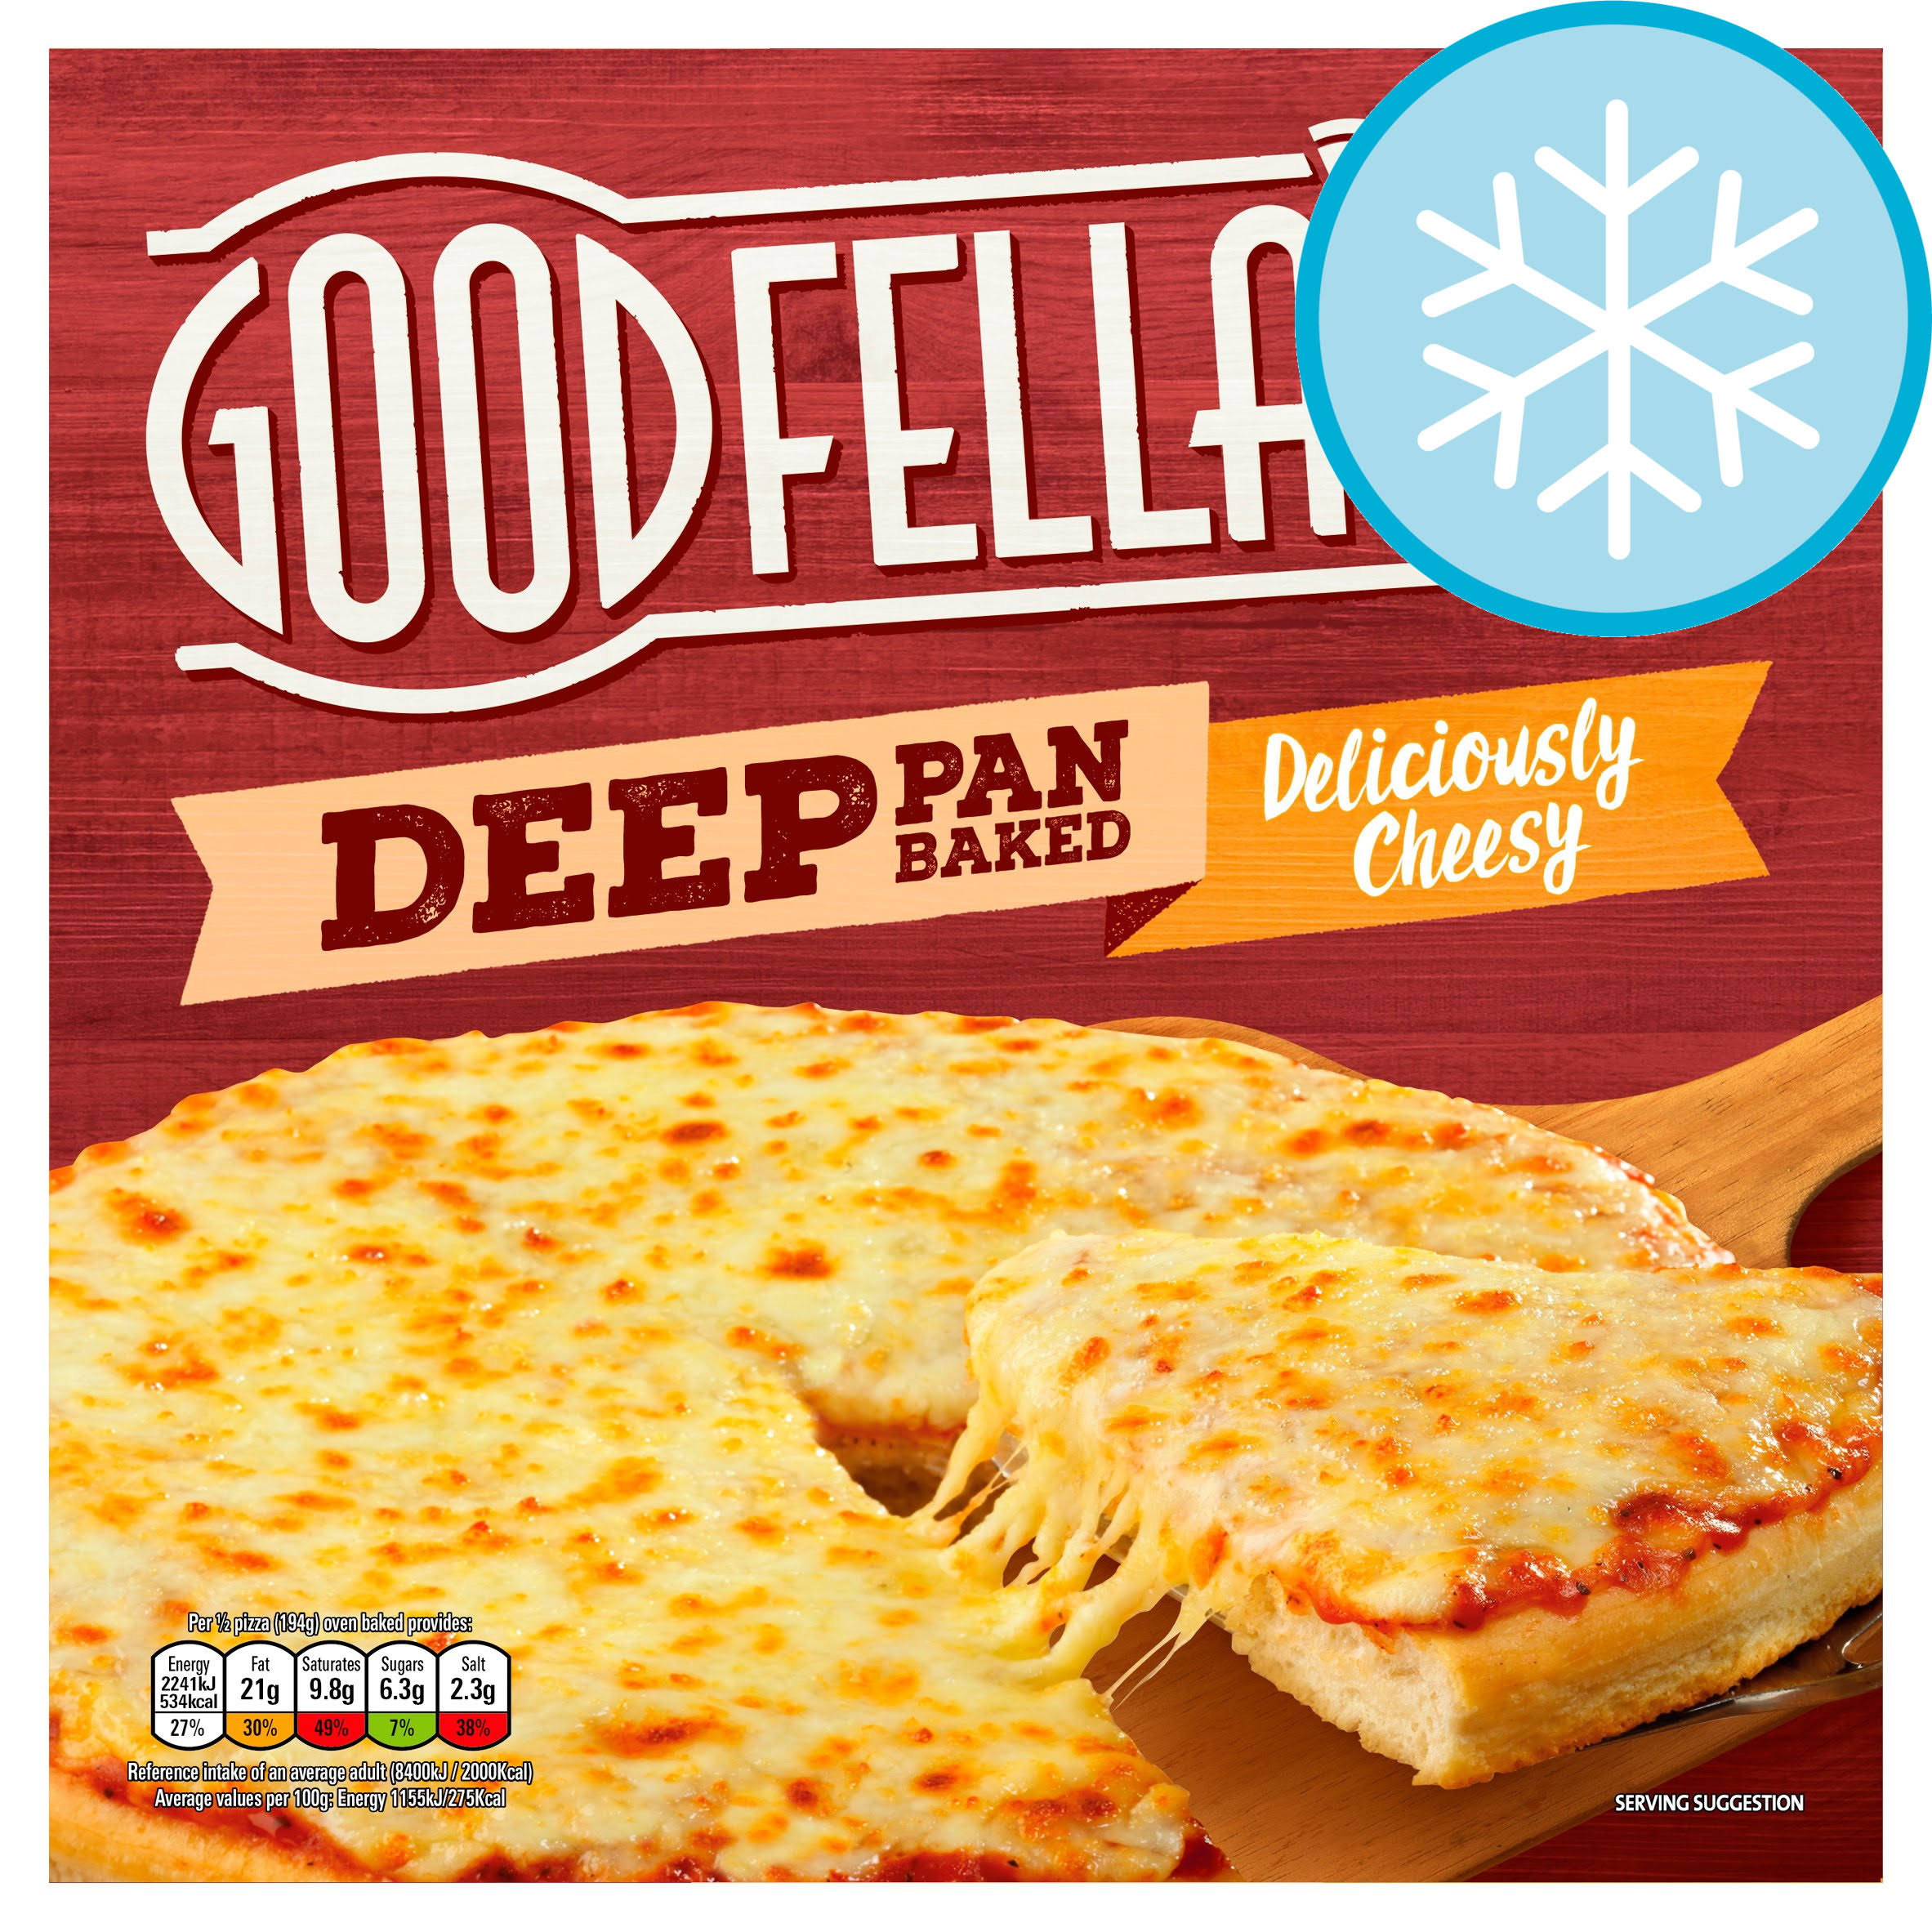 Goodfella's Deep Pan Baked Deliciously Cheesy Frozen Pizza - 421g